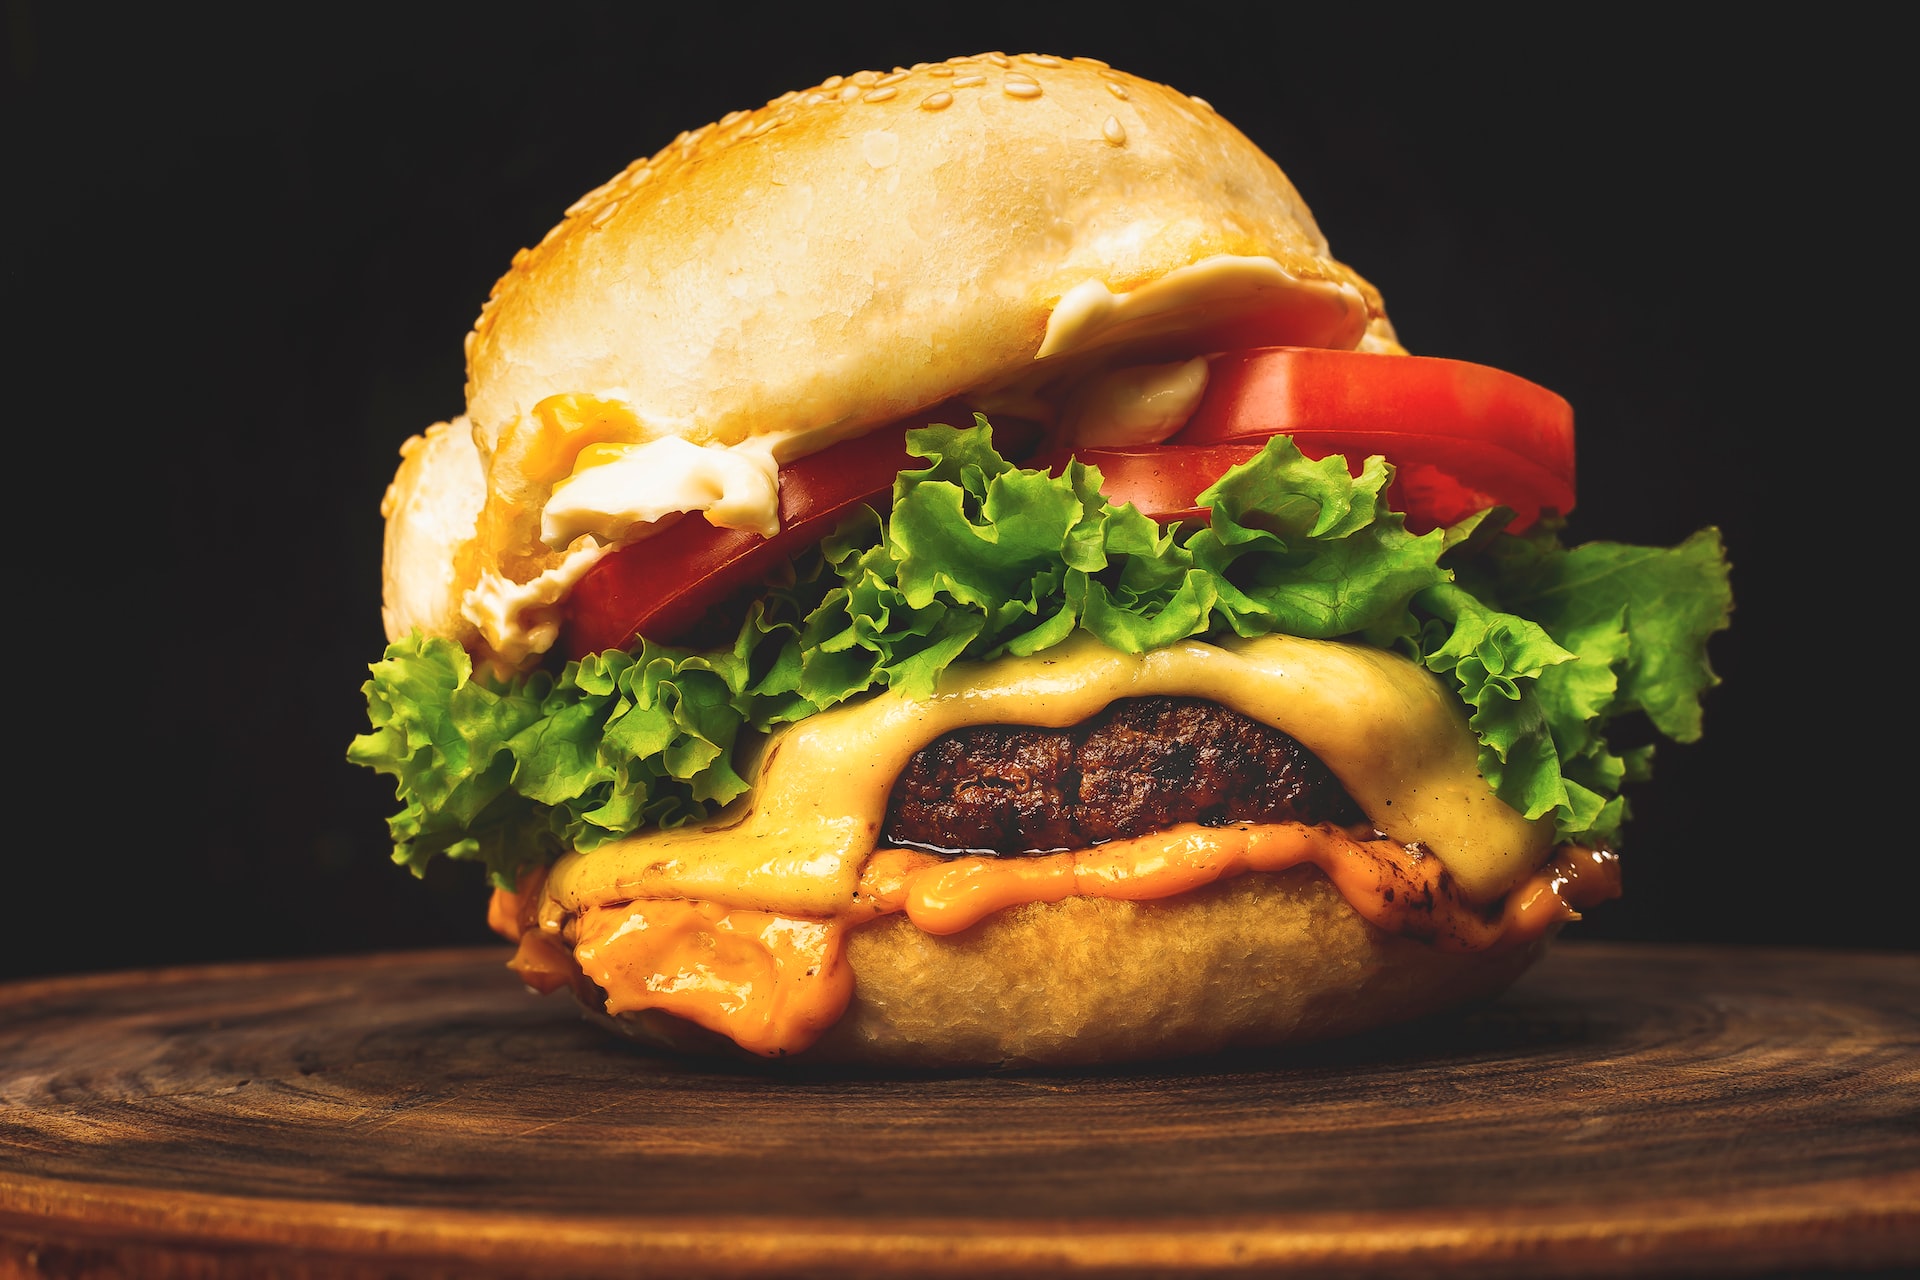 Enjoy a delicious cheeseburger at Seven Brothers restaurant